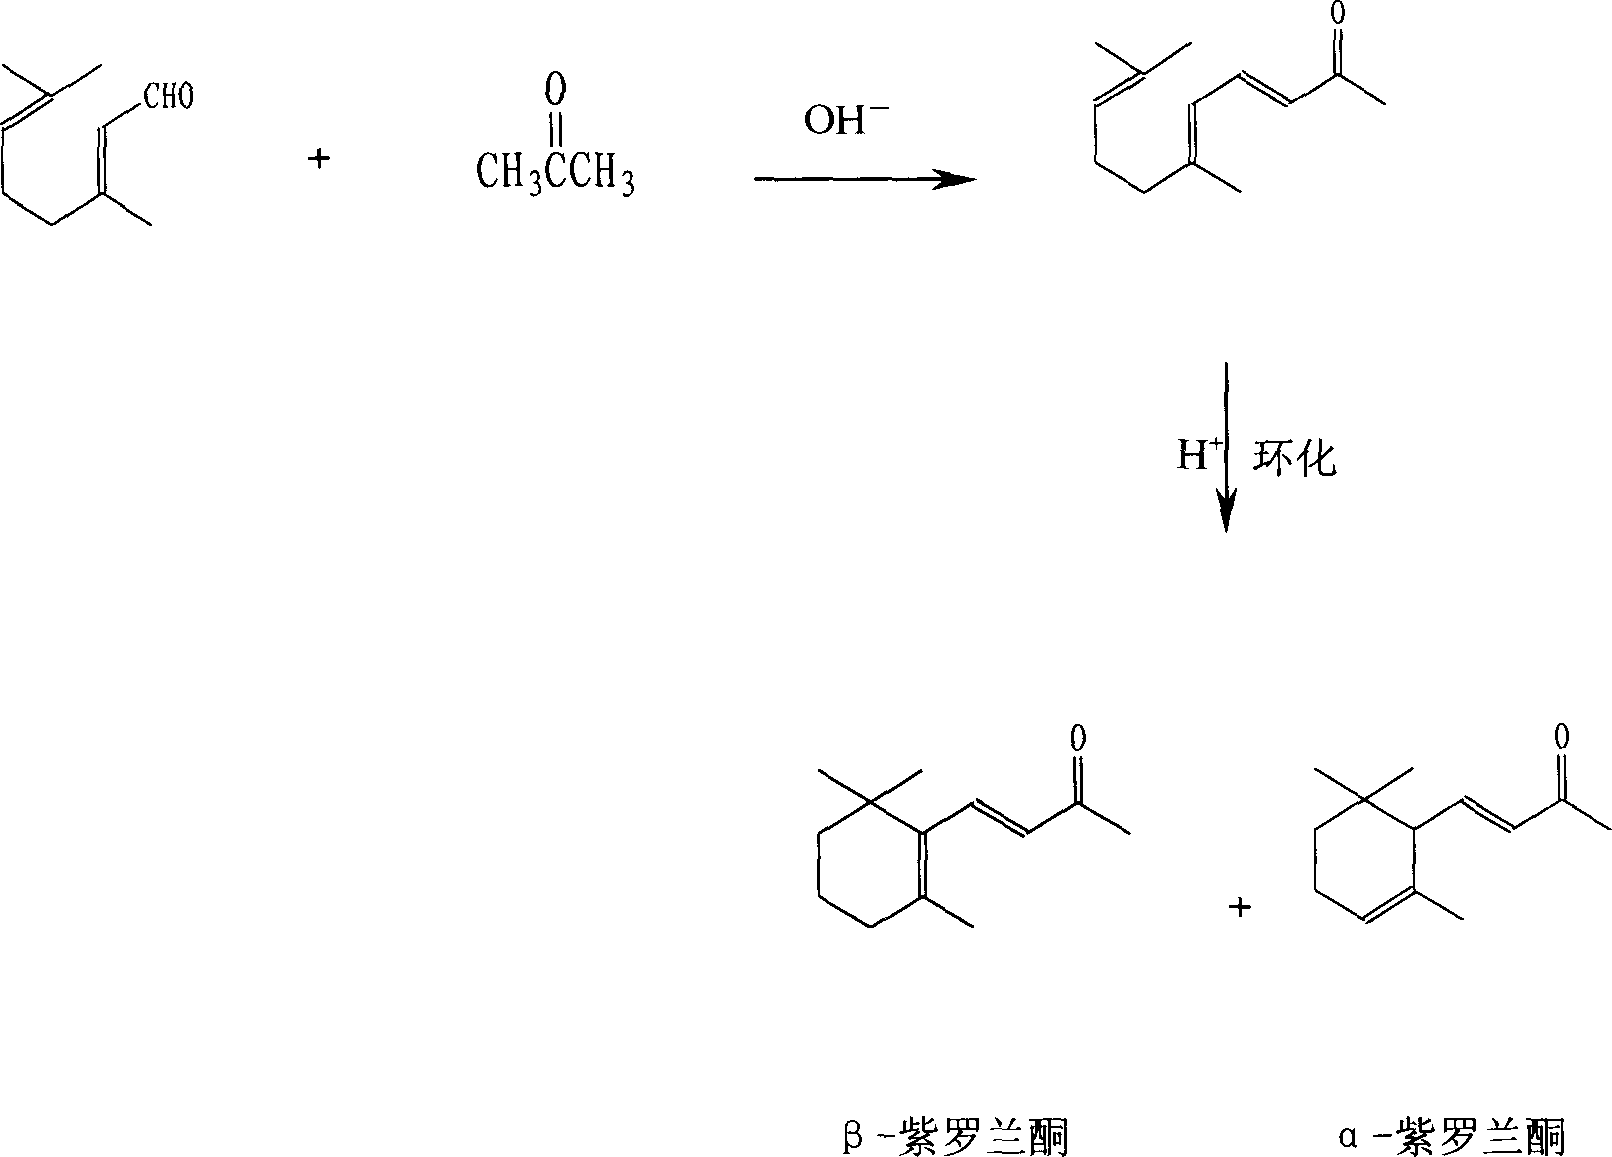 Industrial method for preparing beta-ionone